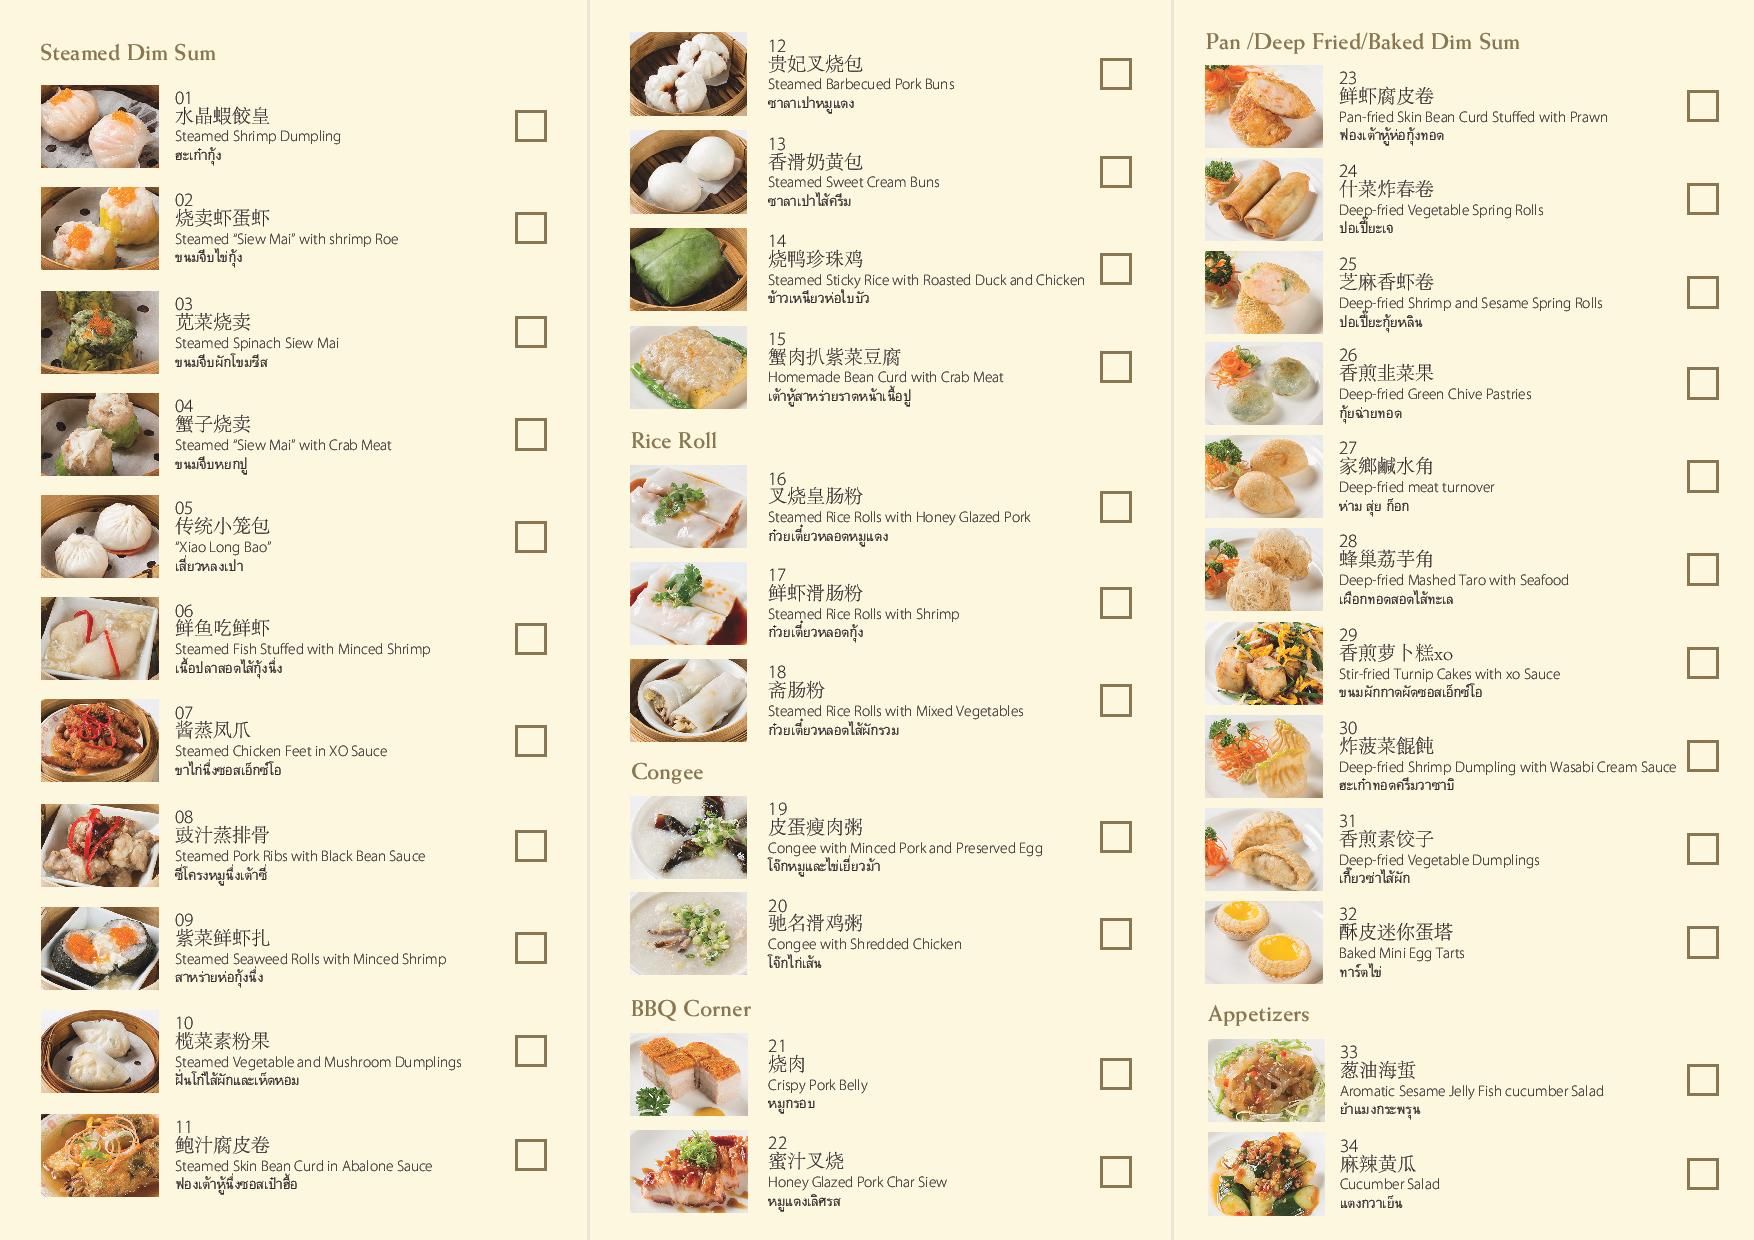 ALL YOU CAN EAT DIM SUM Menu at Shang Palace page 002